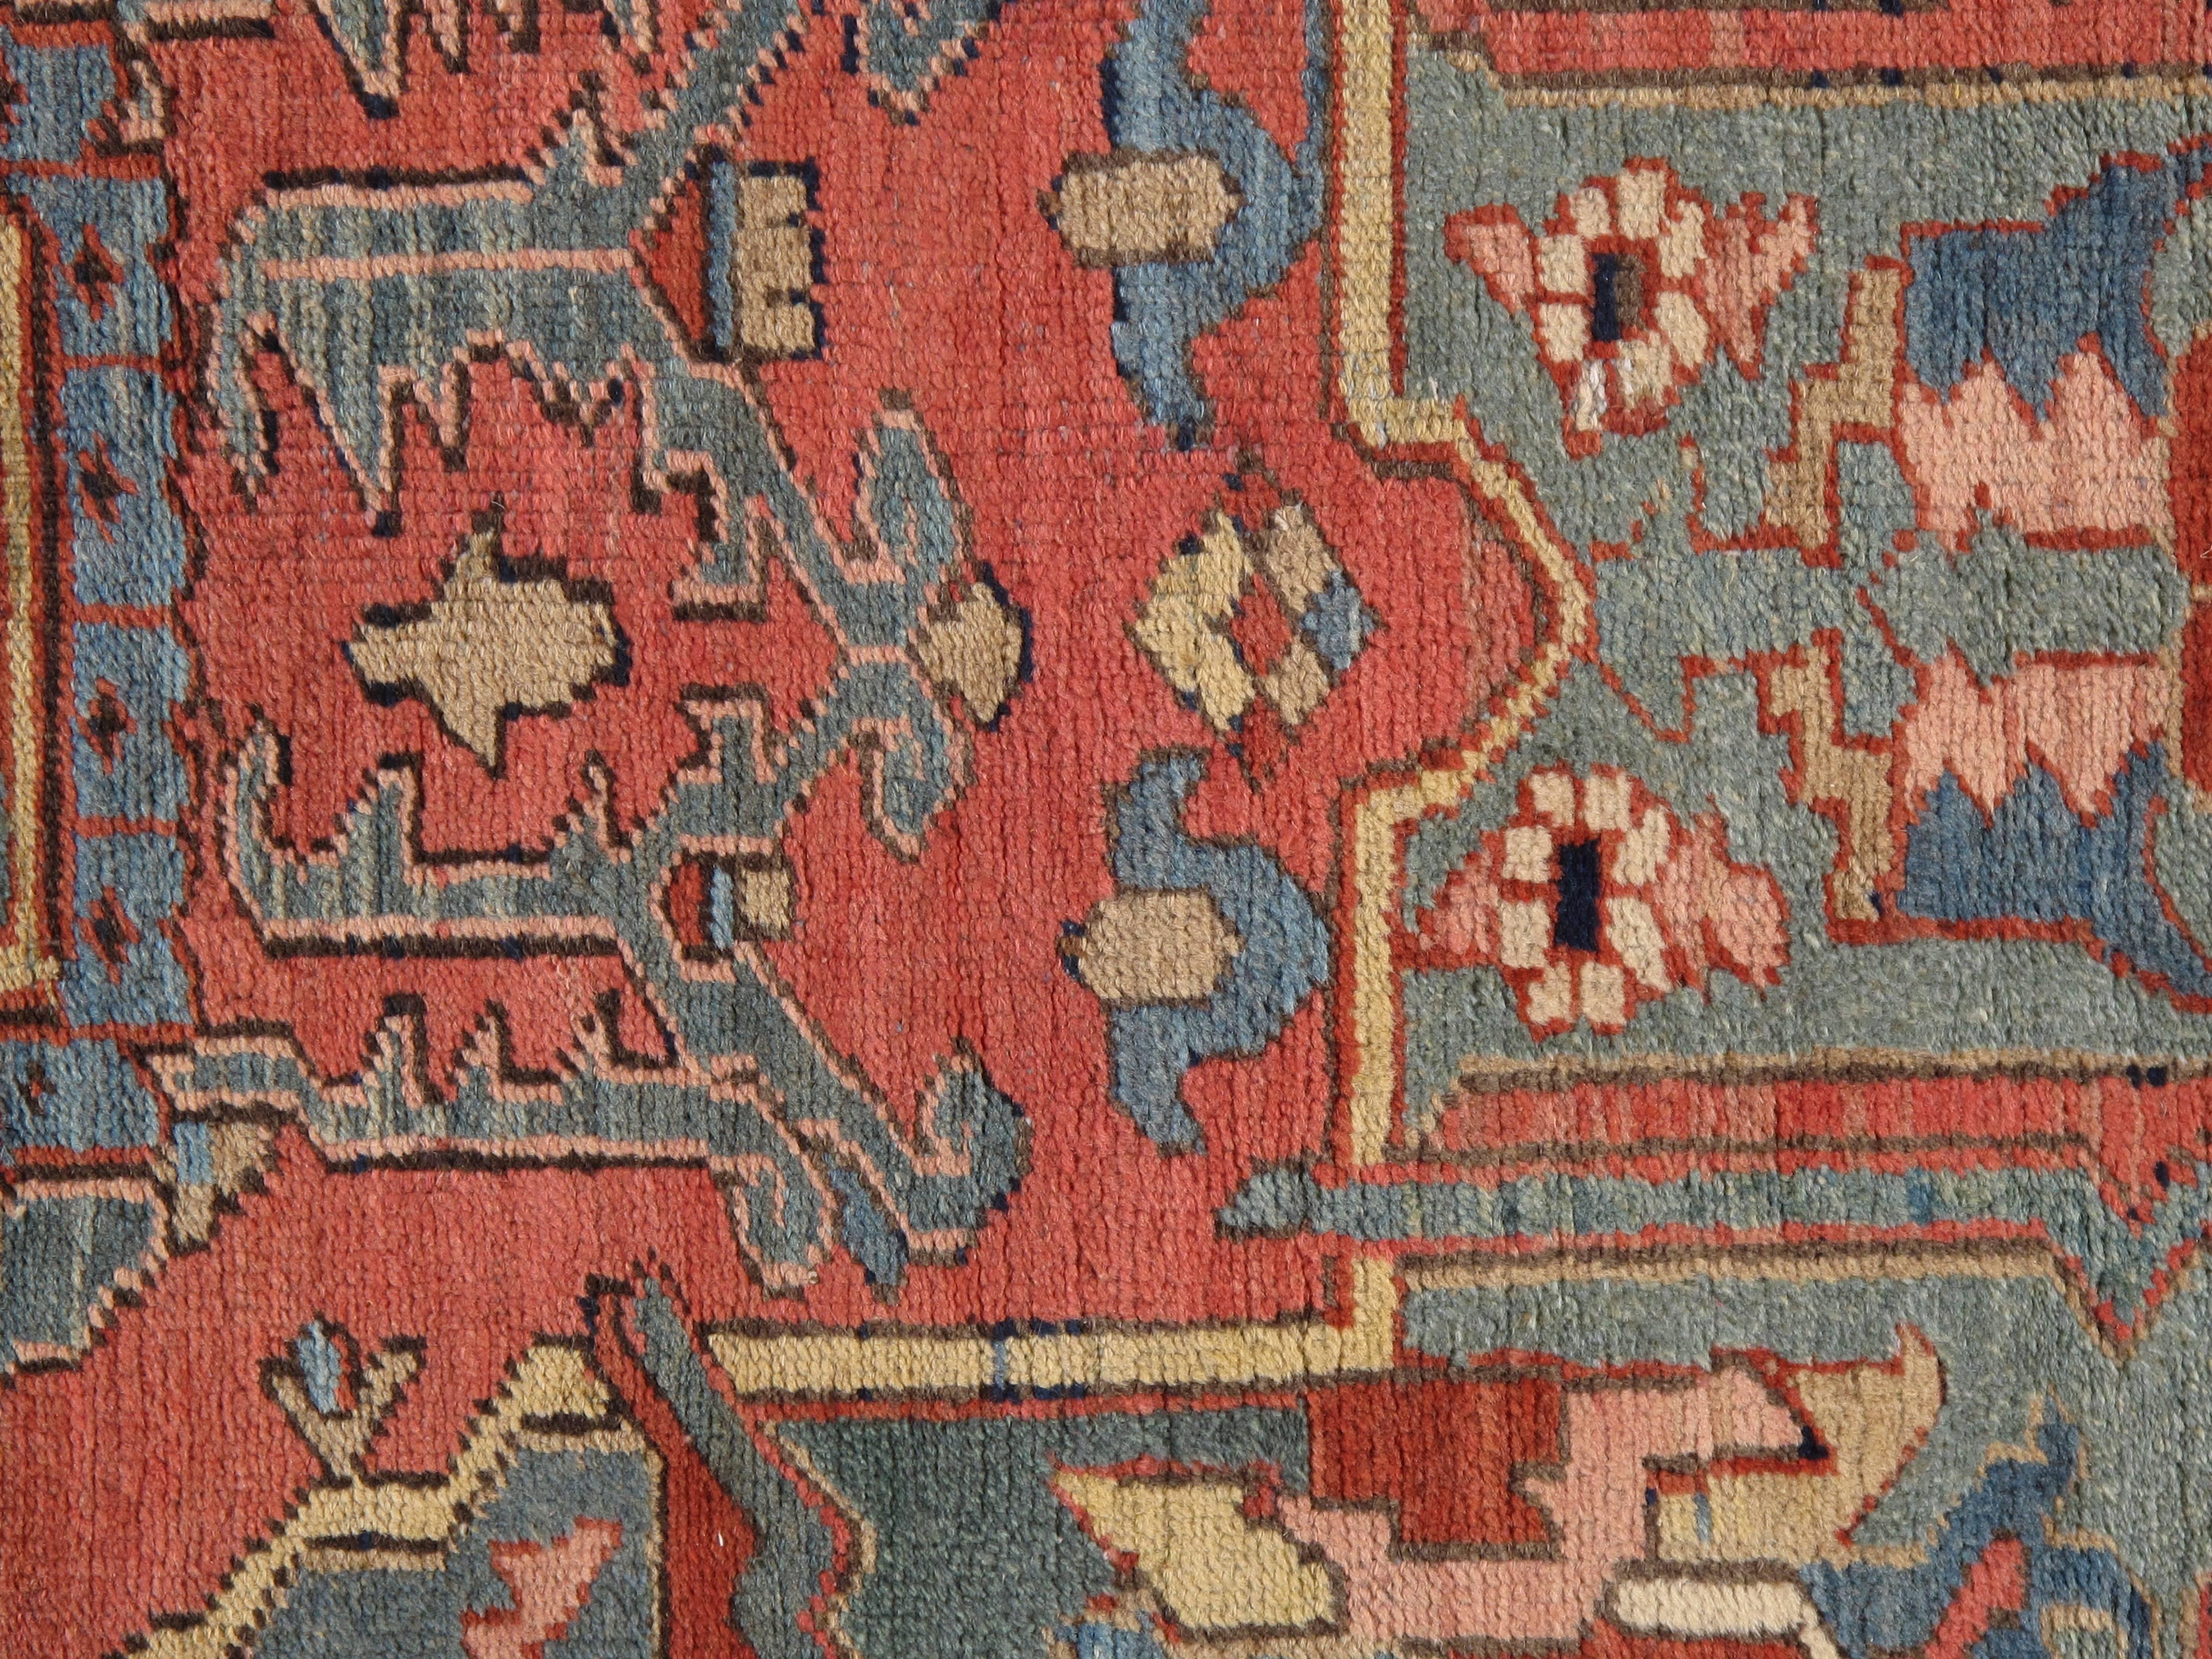 Early 20th Century Antique Persian Heriz Carpet, Handmade Wool Oriental Rug, Rust, Navy, Light Blue